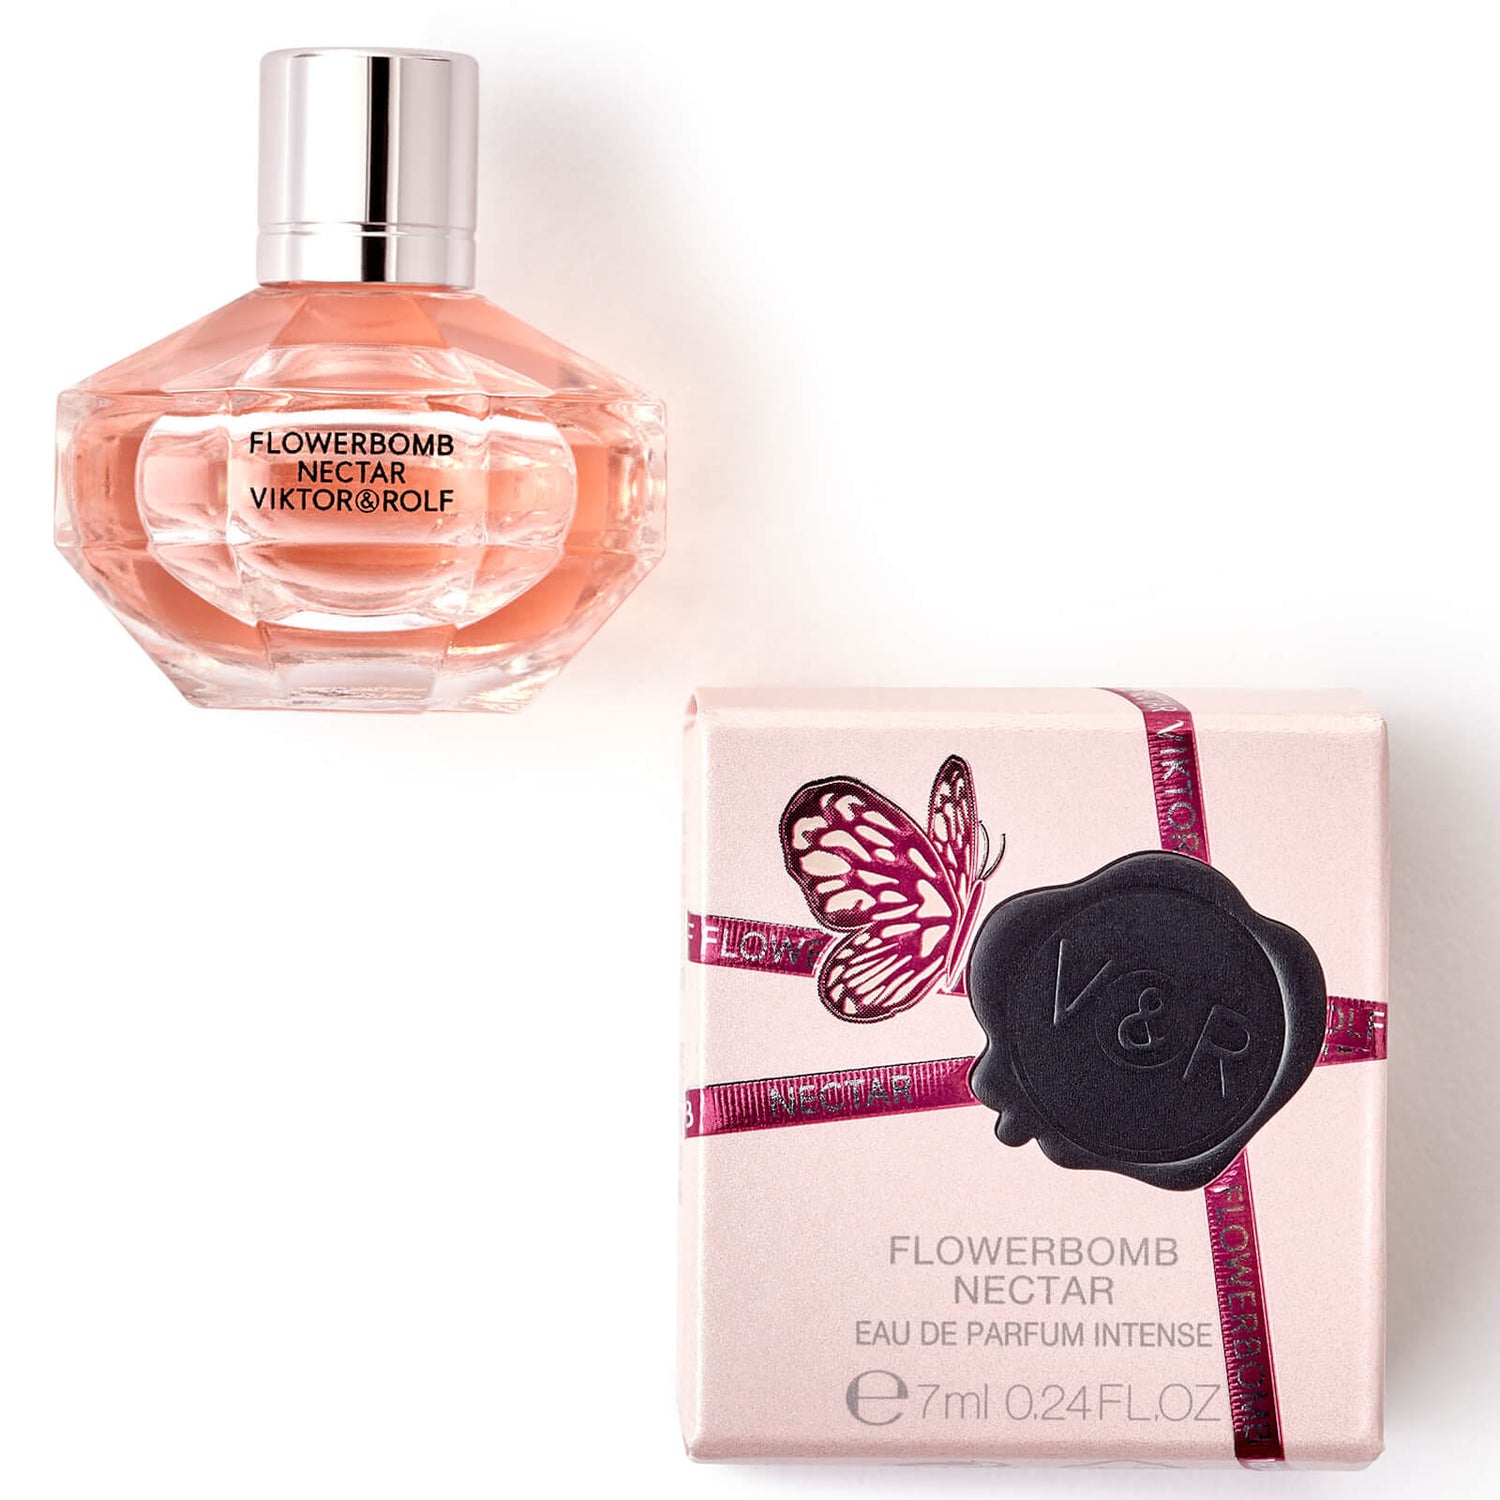 Skinnende Energize Andet Viktor & Rolf Flowerbomb Nectar Eau de Parfum | GLOSSYBOX US